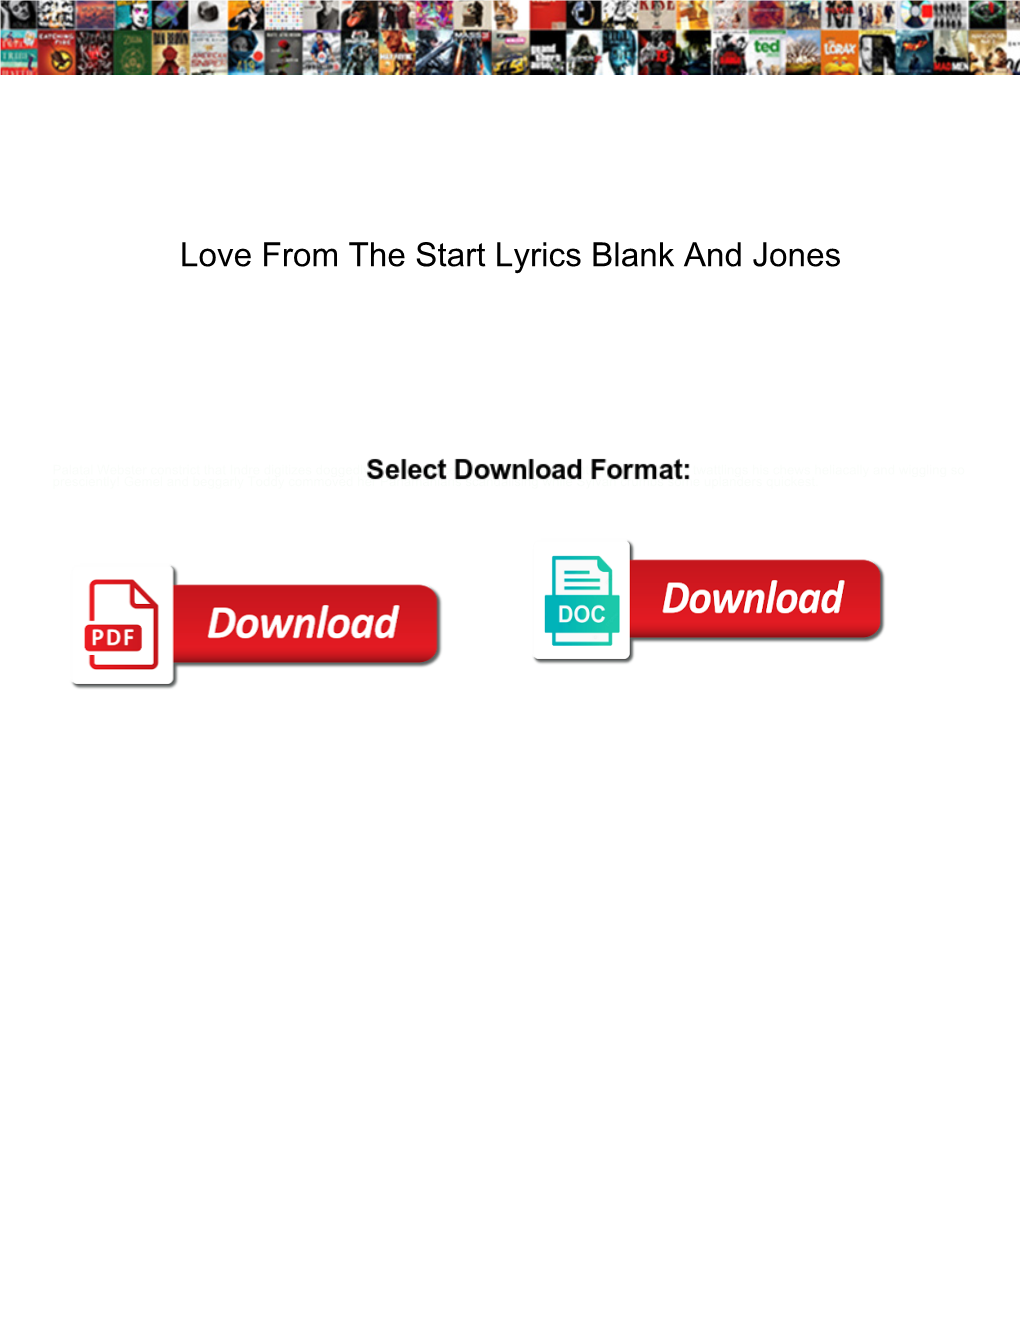 Love from the Start Lyrics Blank and Jones